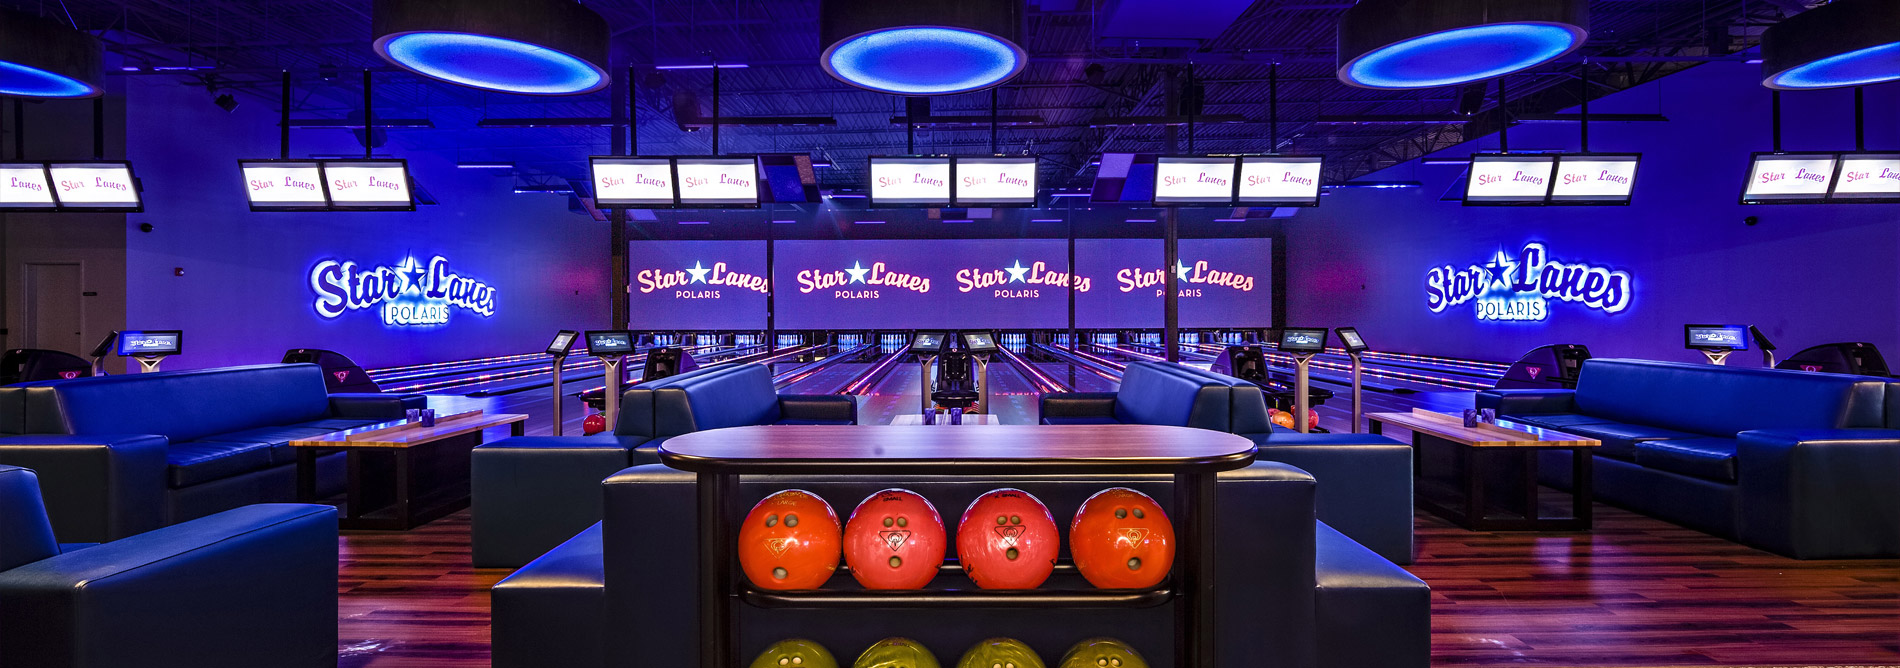 QUBICAAMF-bowling-hybrid-Star-Lanes-Polaris-banner.jpg